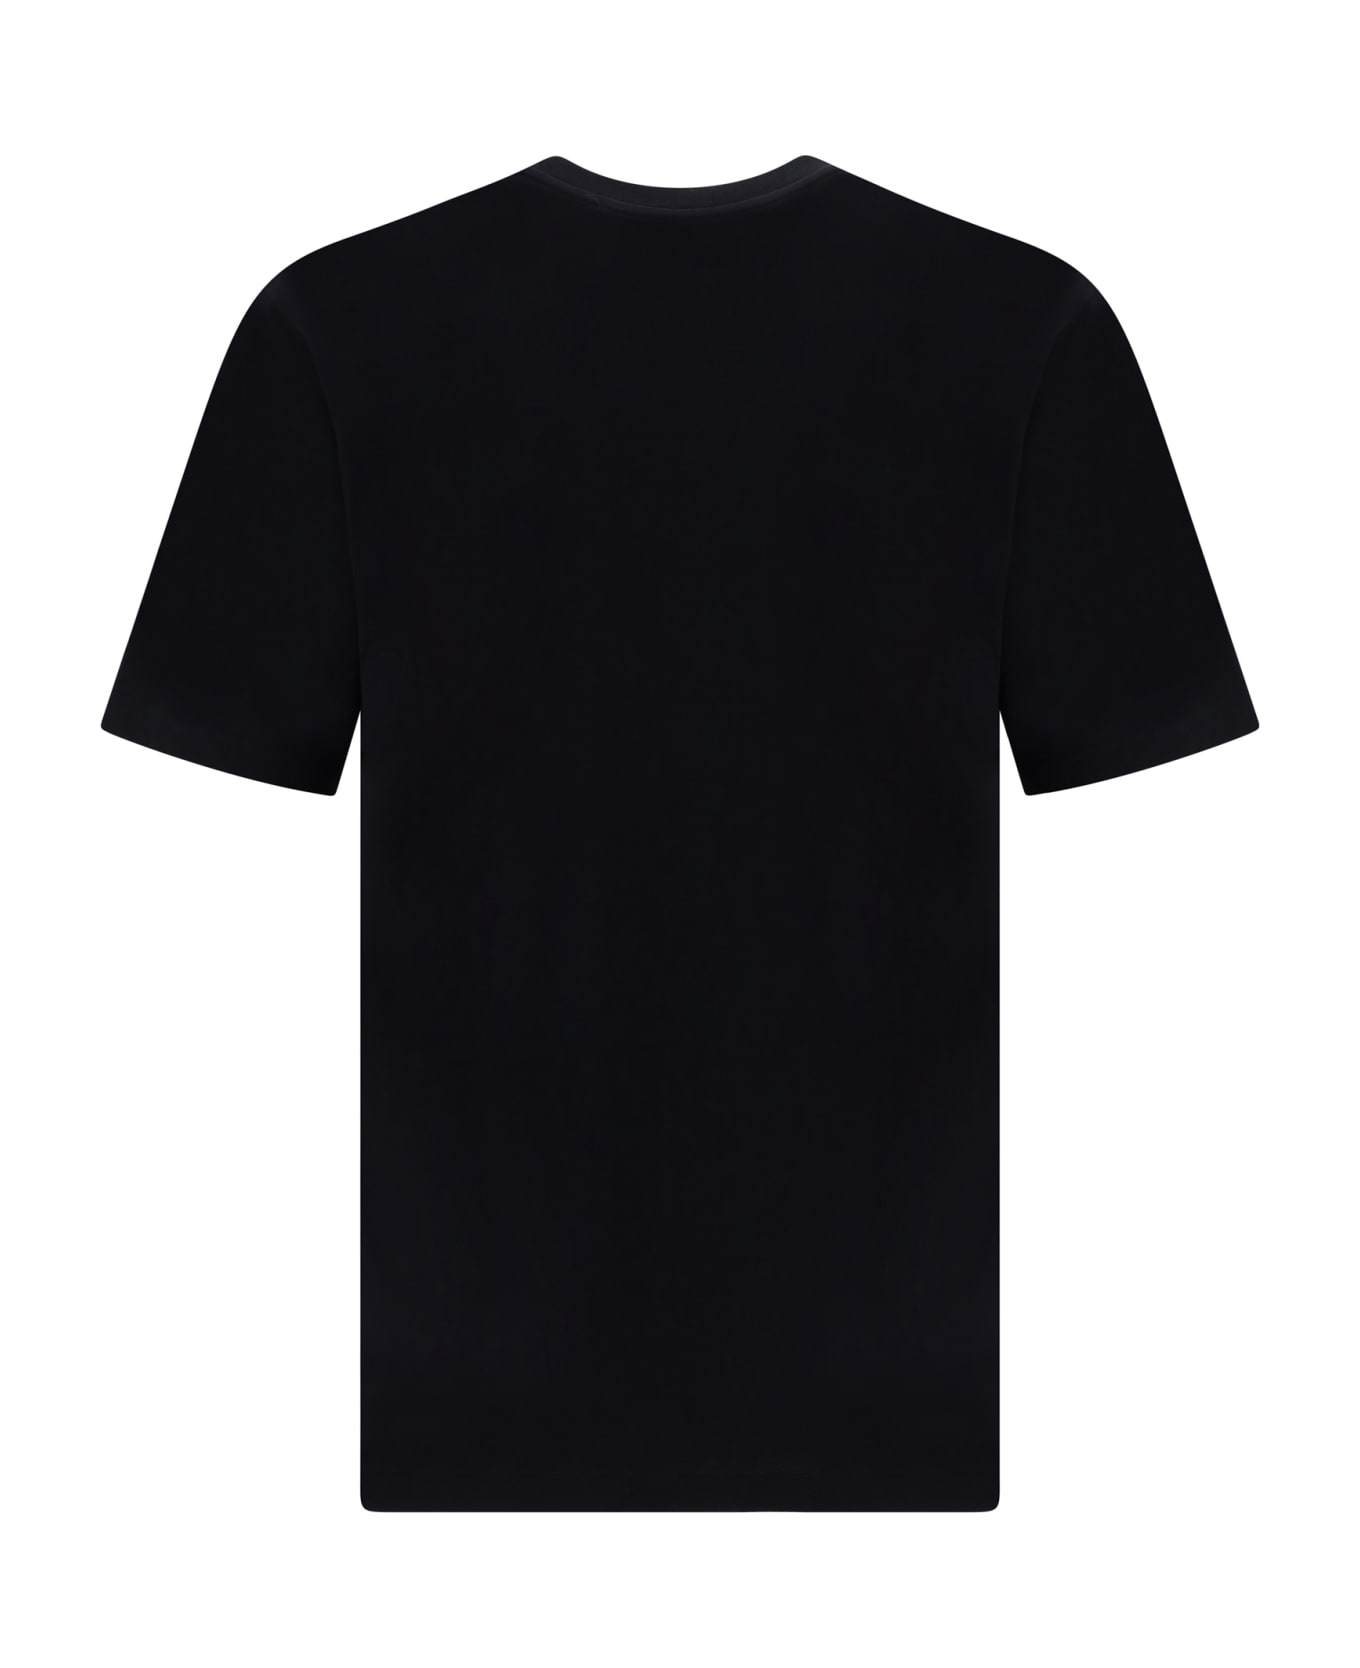 Moschino T-shirt - A1555